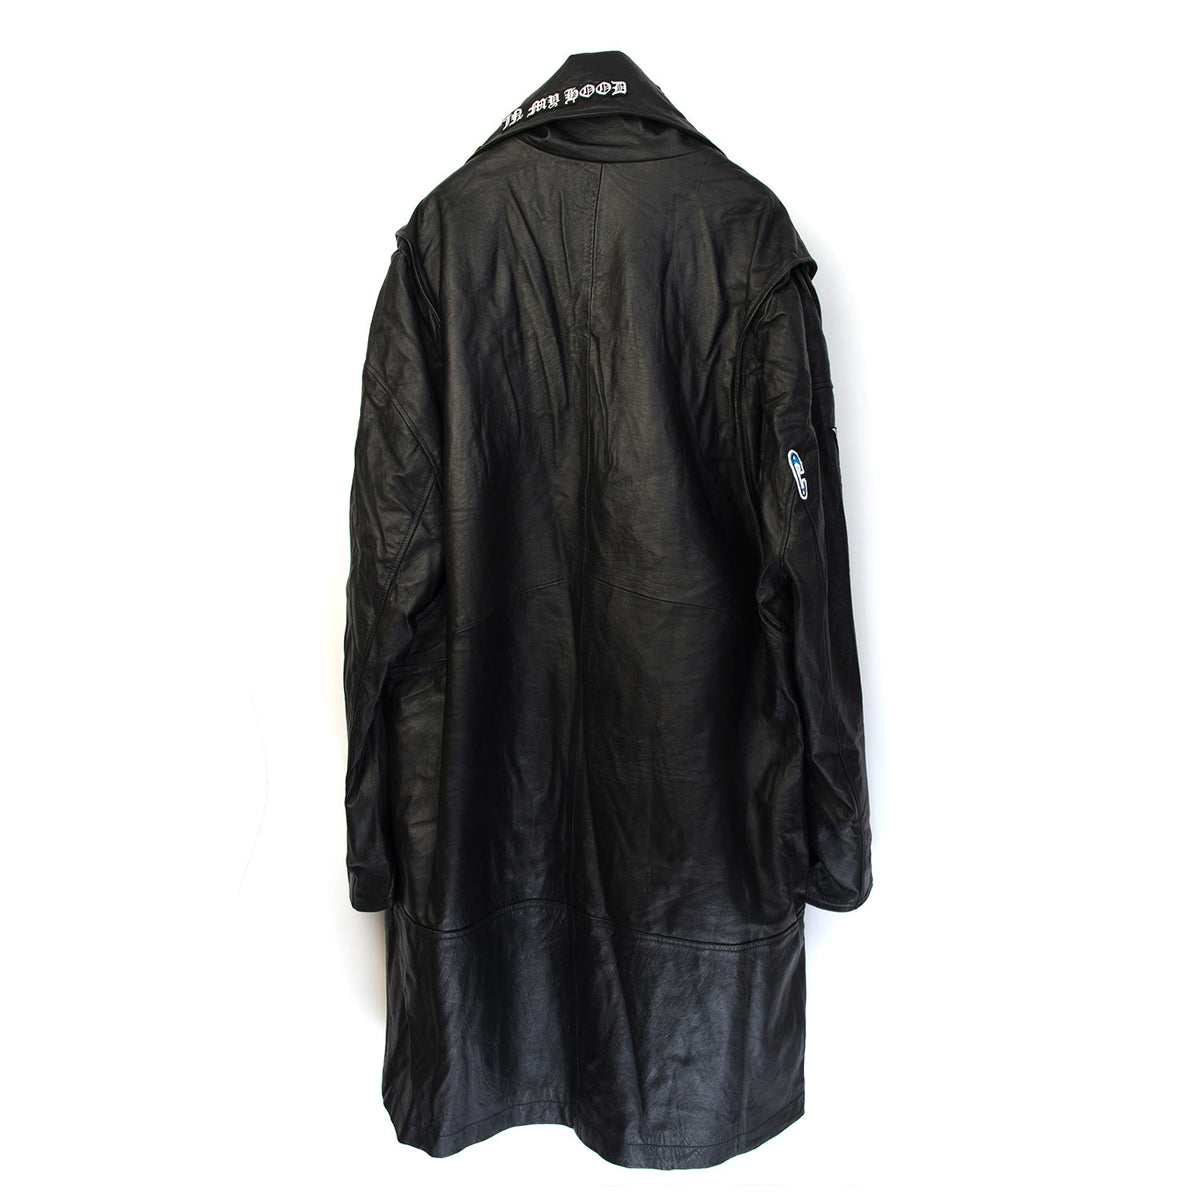 Ground Zero | Patches Leather Jacket Black - Concrete